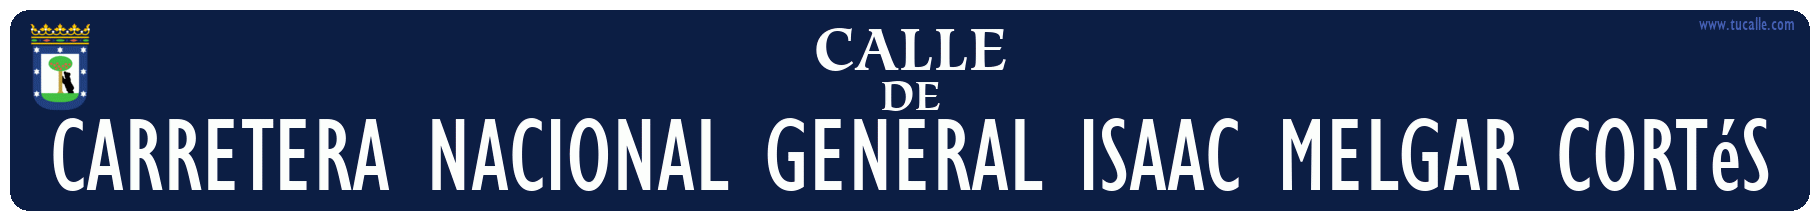 cartel_de_calle-de-Carretera Nacional General Isaac Melgar Cortés_en_madrid_antiguo